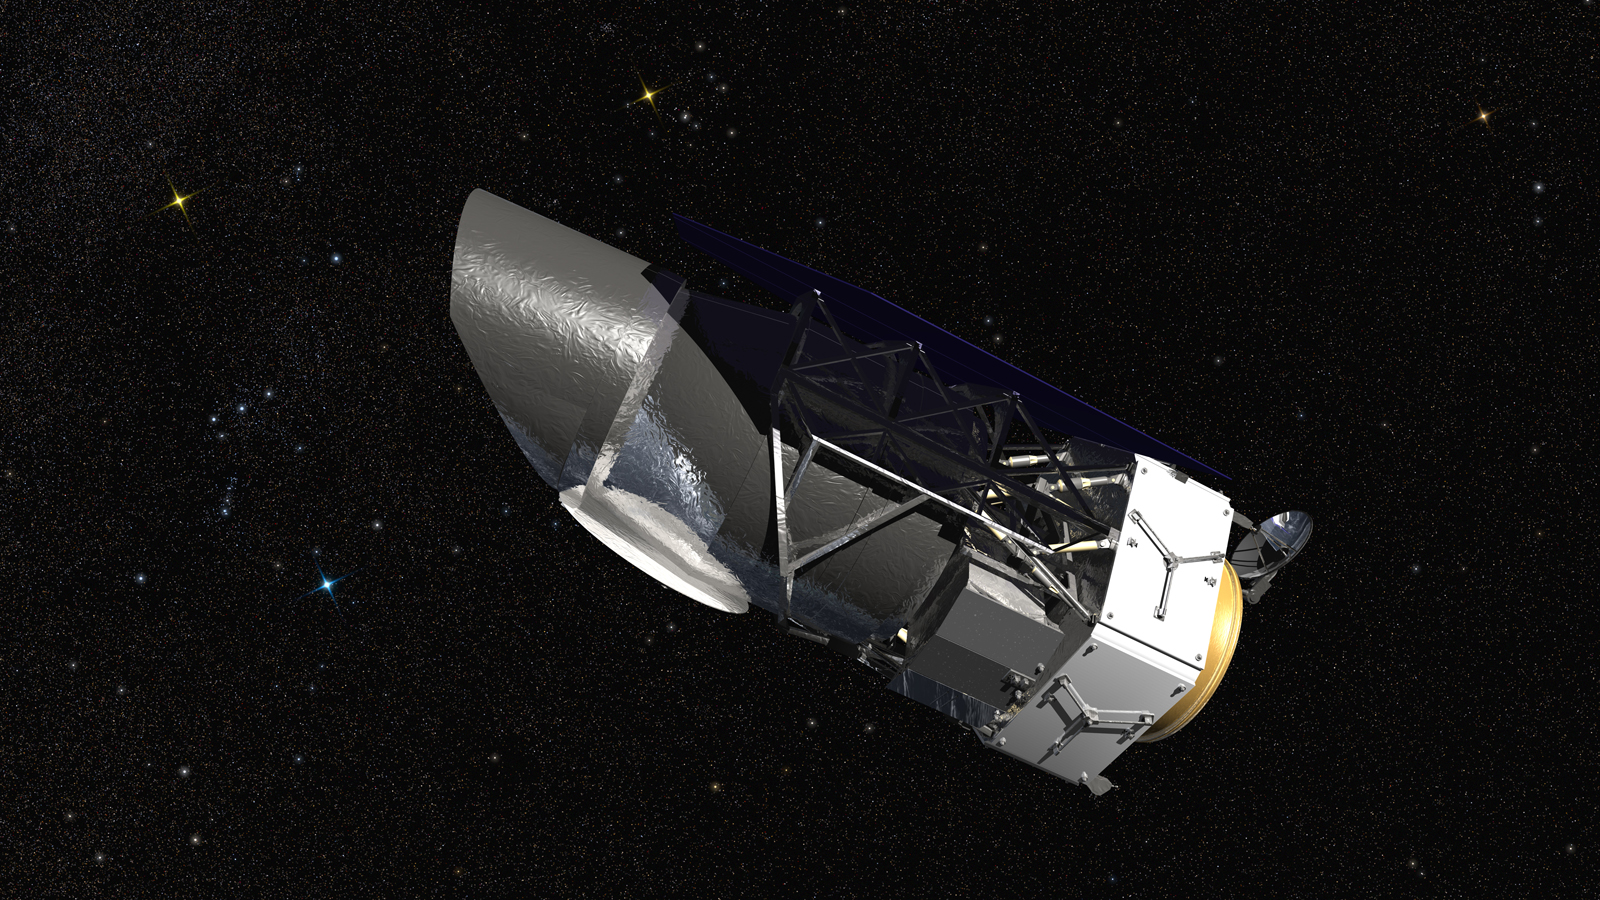 NASA's Wide Field Infrared Survey Telescope